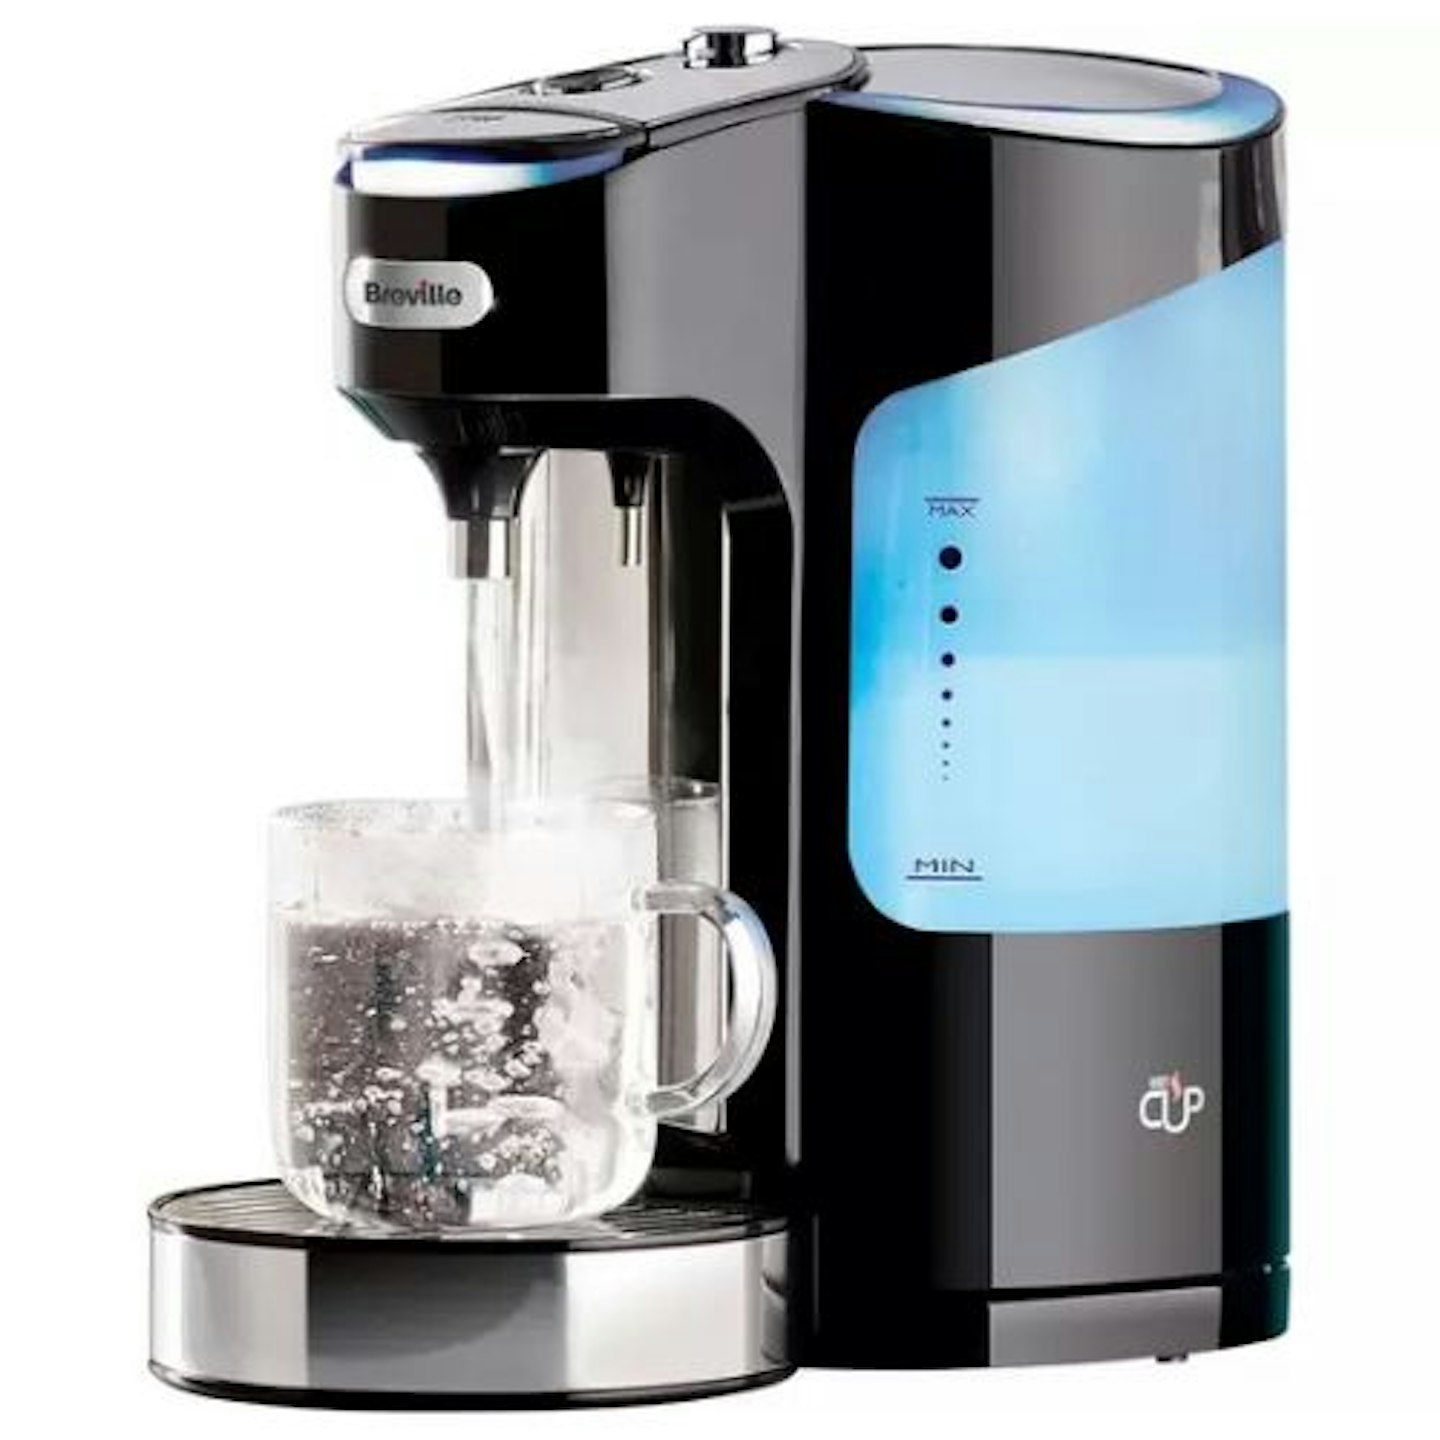 Breville Hot Cup VKJ318 Five-Cup Hot Water Dispenser